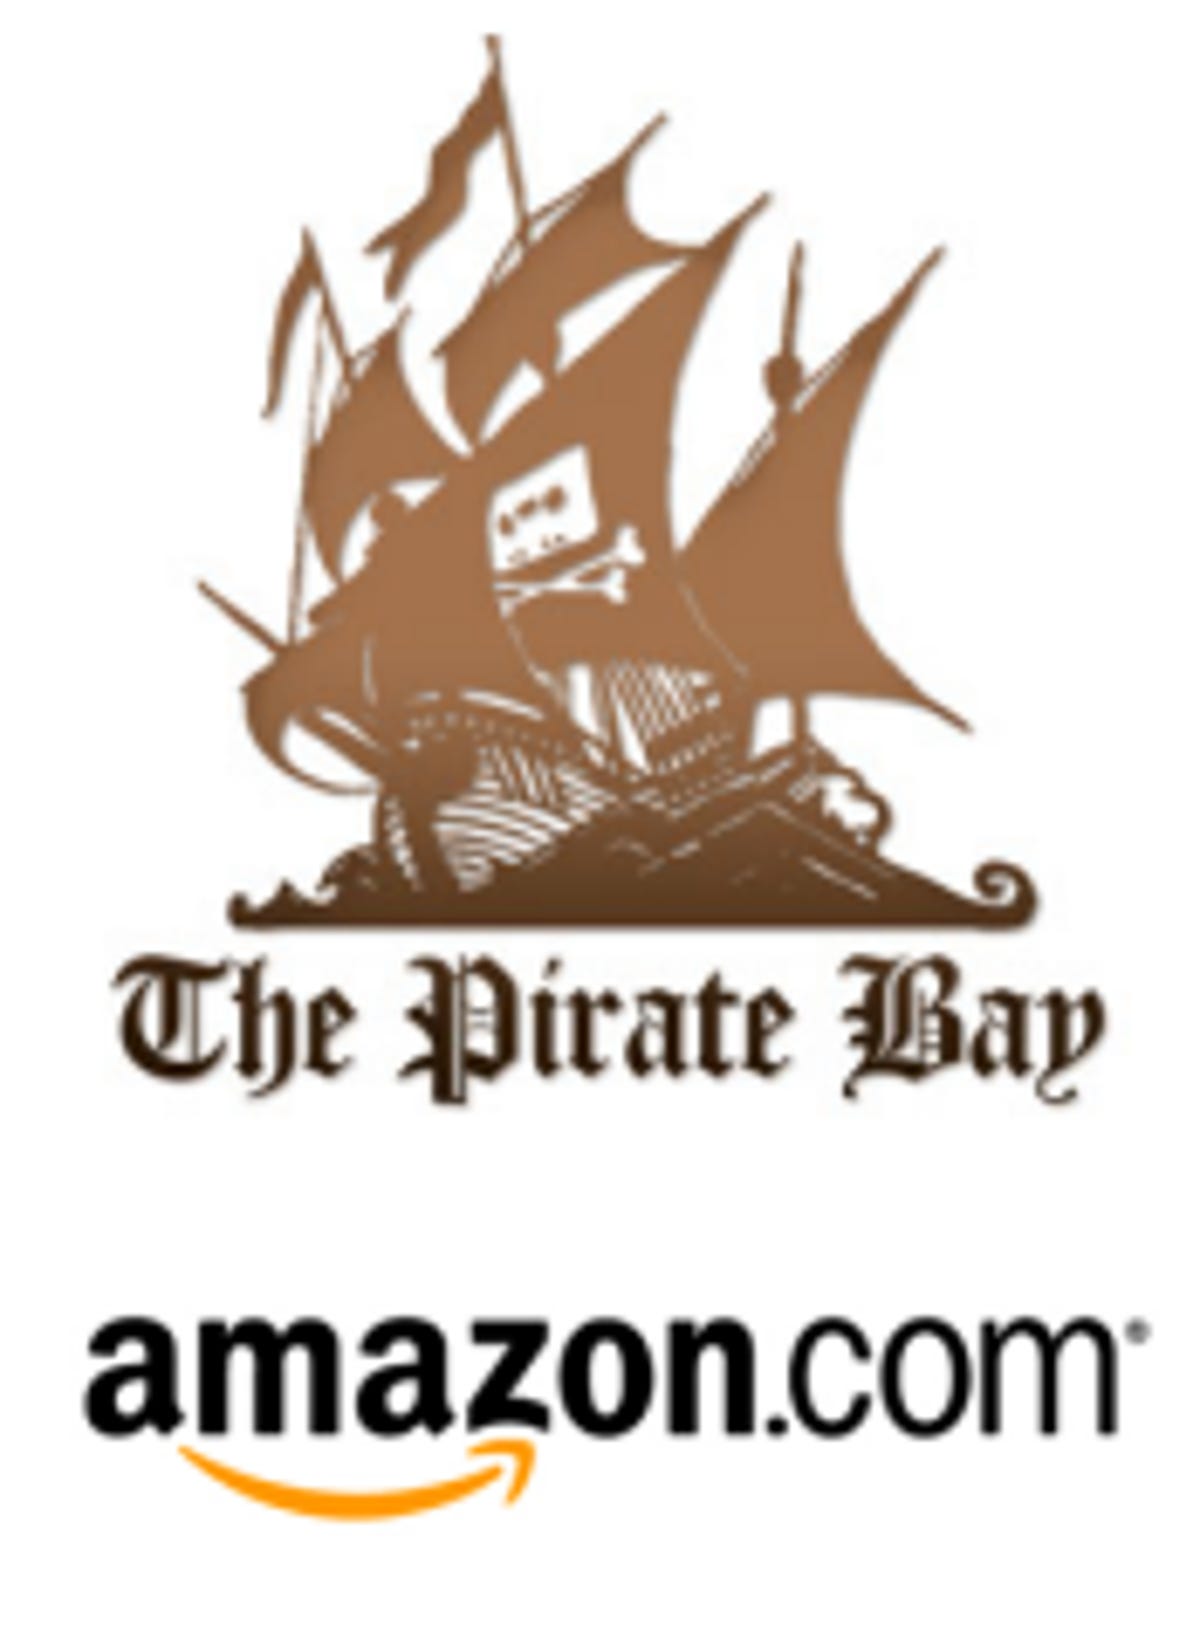 Pirate Bay/Amazon graphic